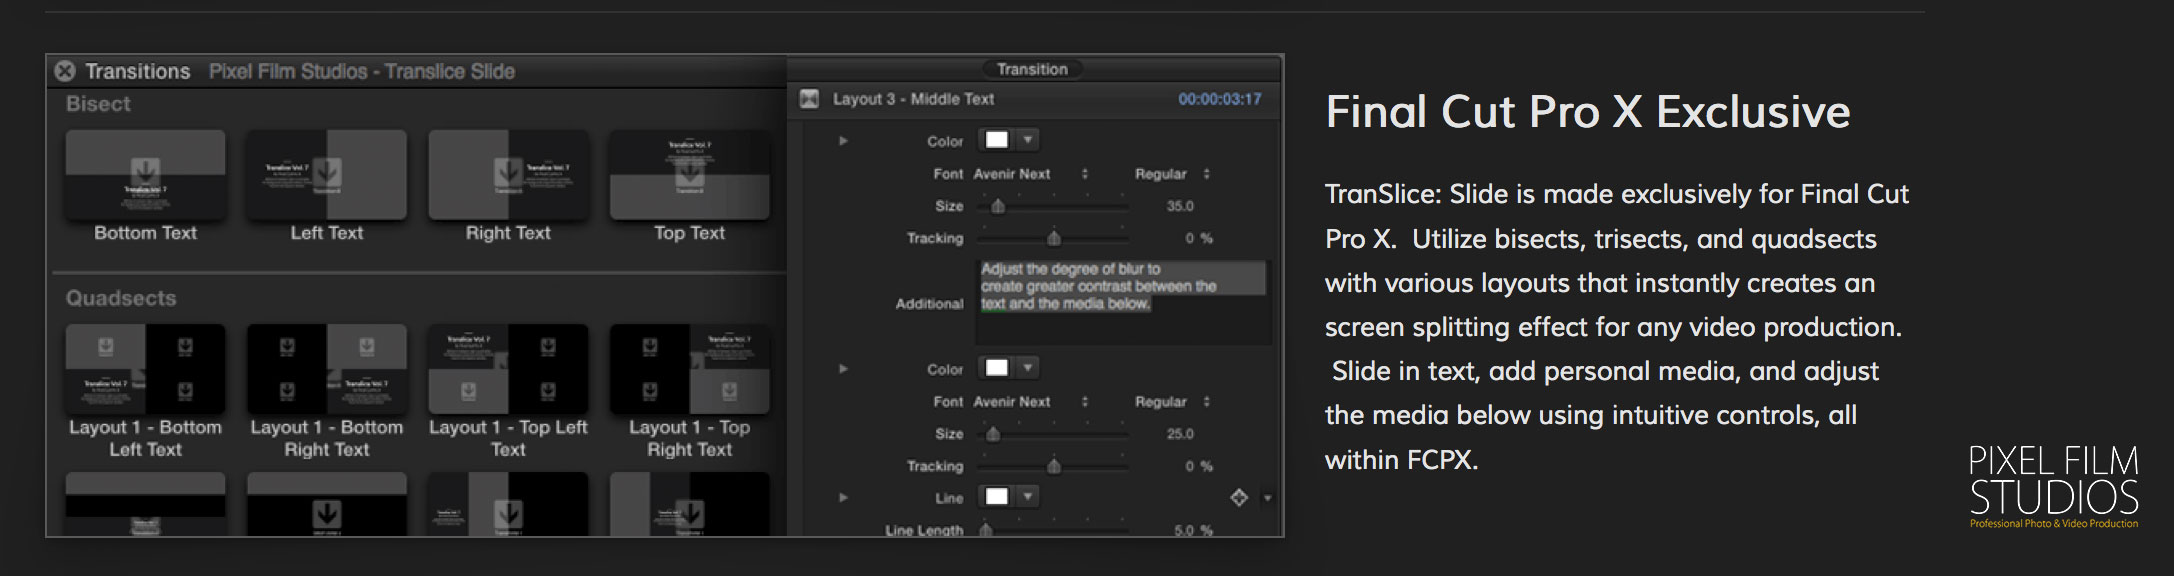 TranSlice Slide - FCPX Transitions - Final Cut Pro X